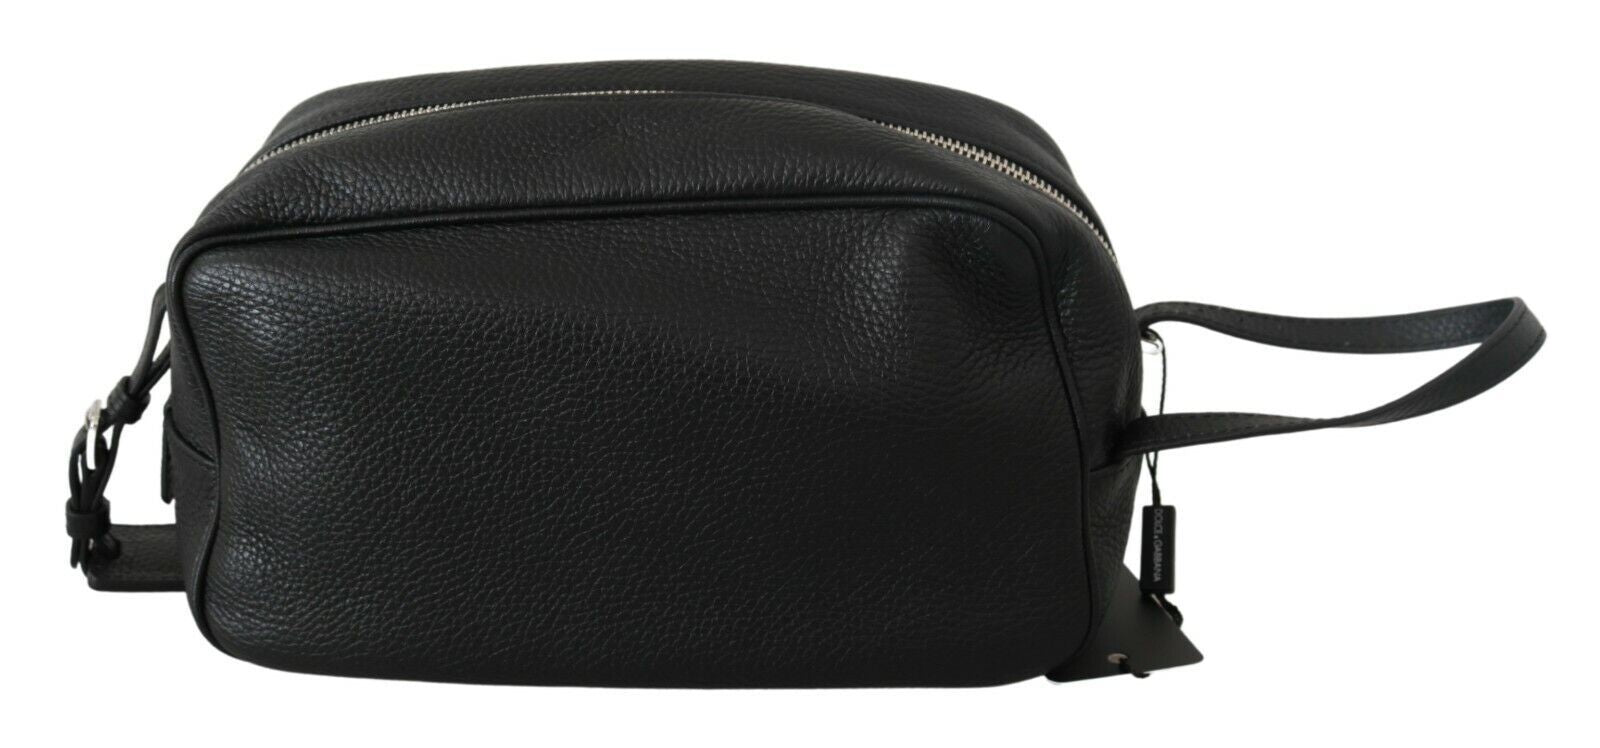 Dolce & Gabbana Sleek Black Leather Wristlet Clutch Bag